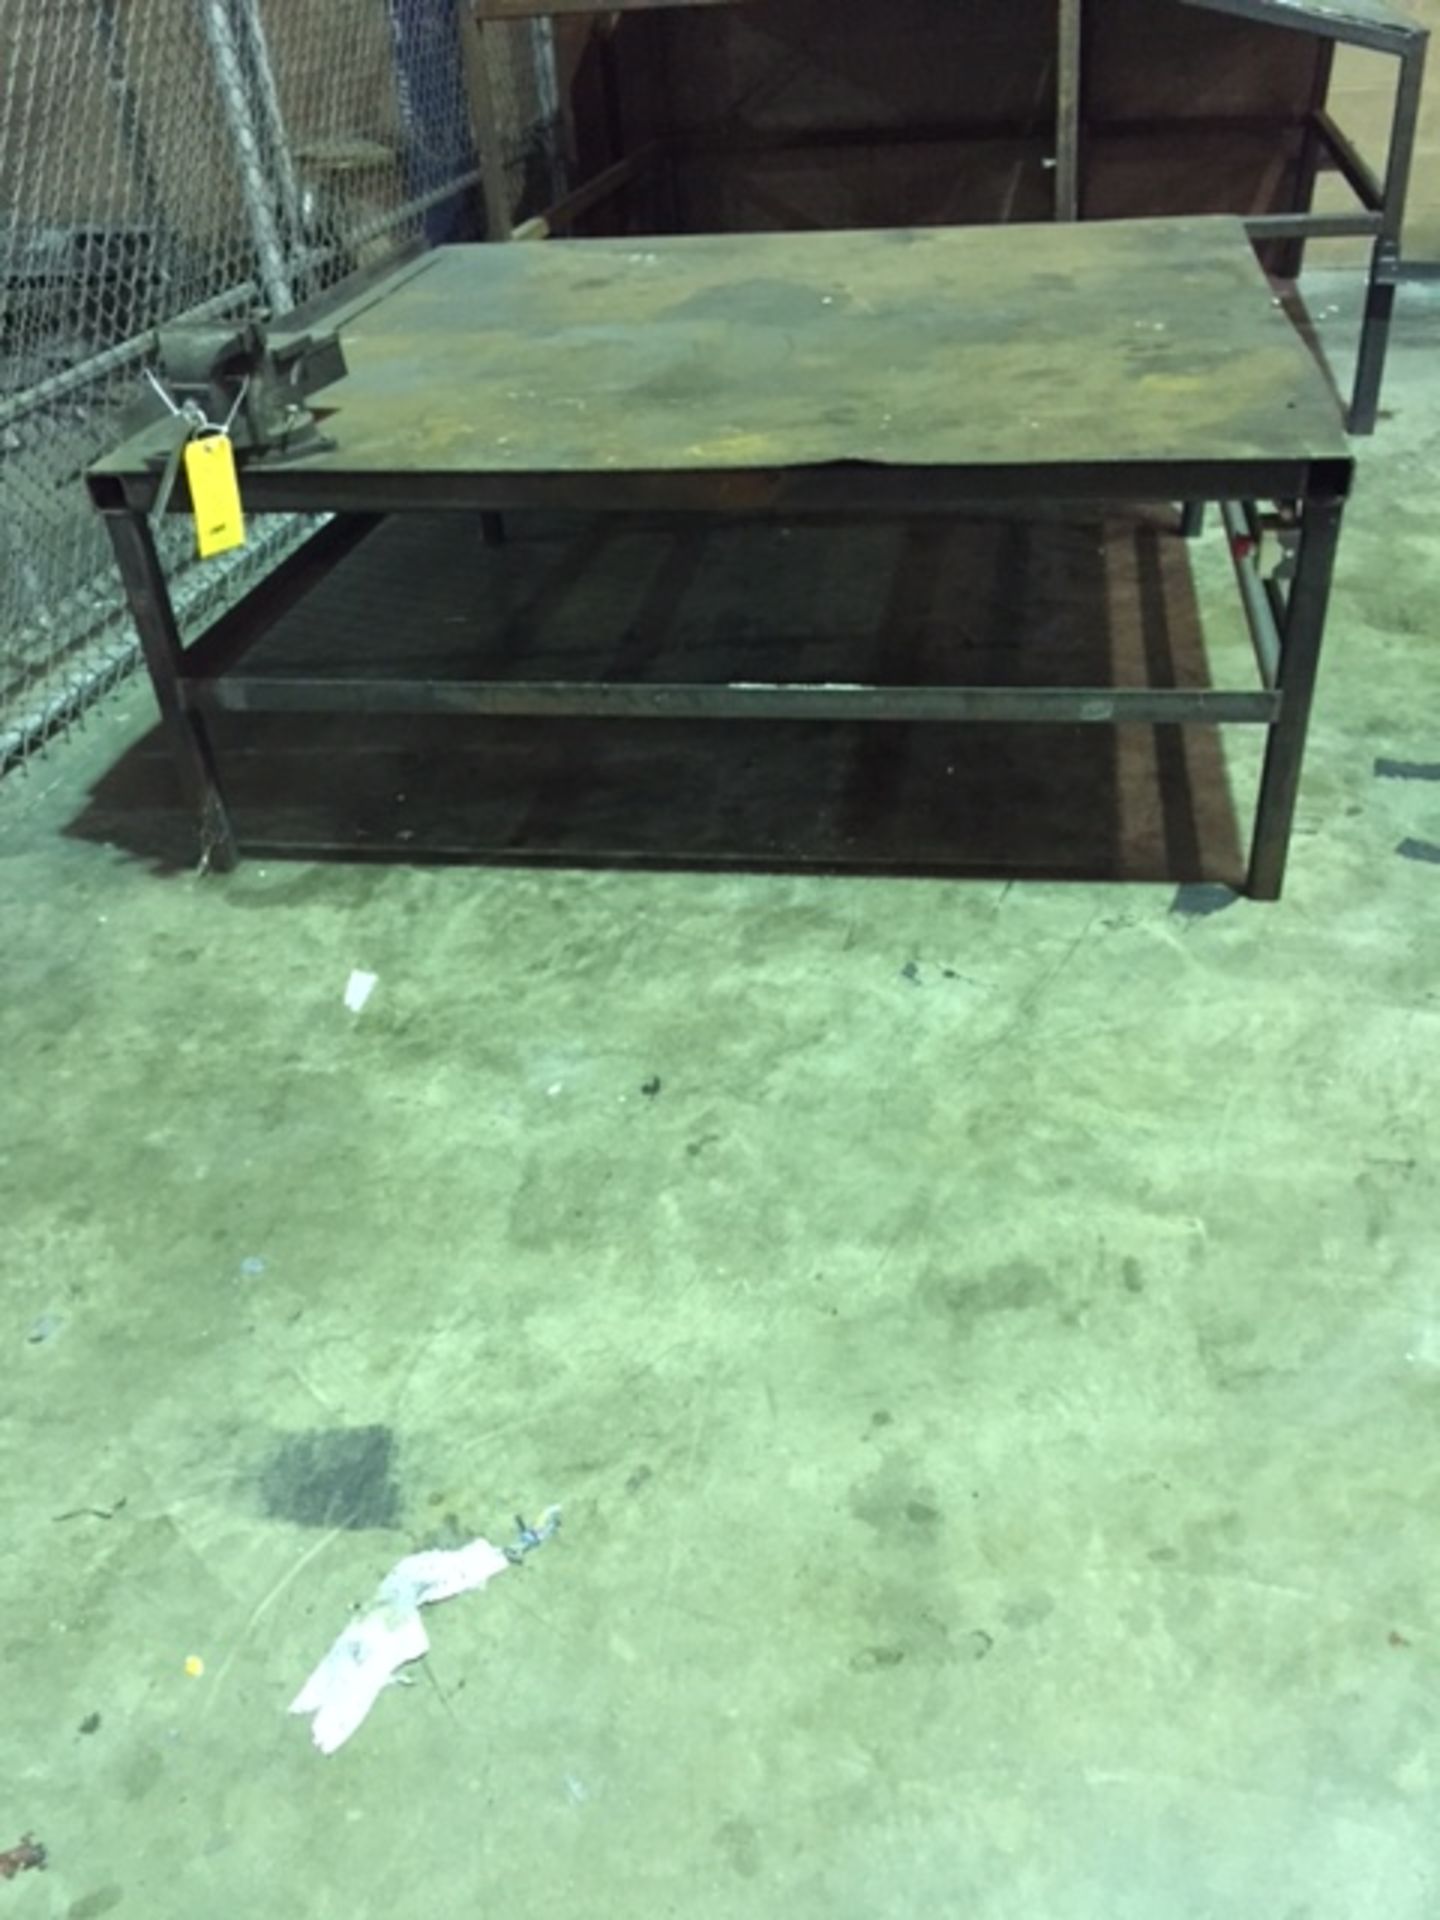 Steel Fabricated Work Table 6' x 10" x 28" tall w/ mounted vice